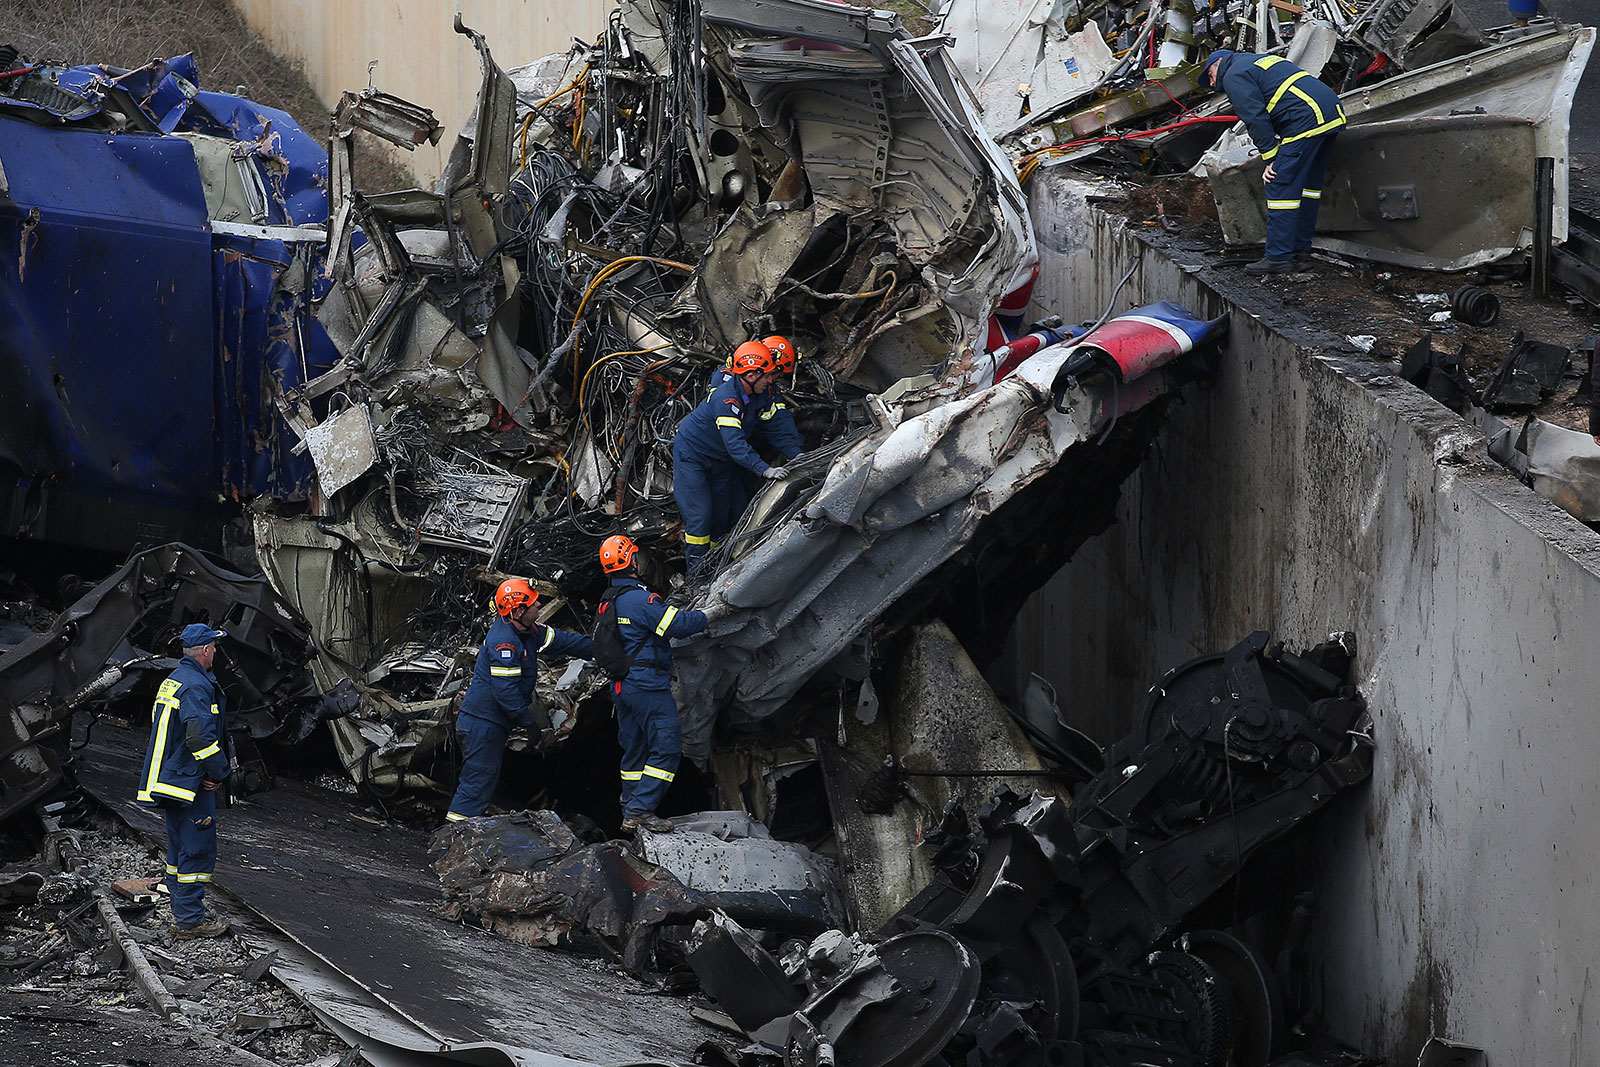 “Tragic human error” caused fatal train collision, Greek prime minister says 